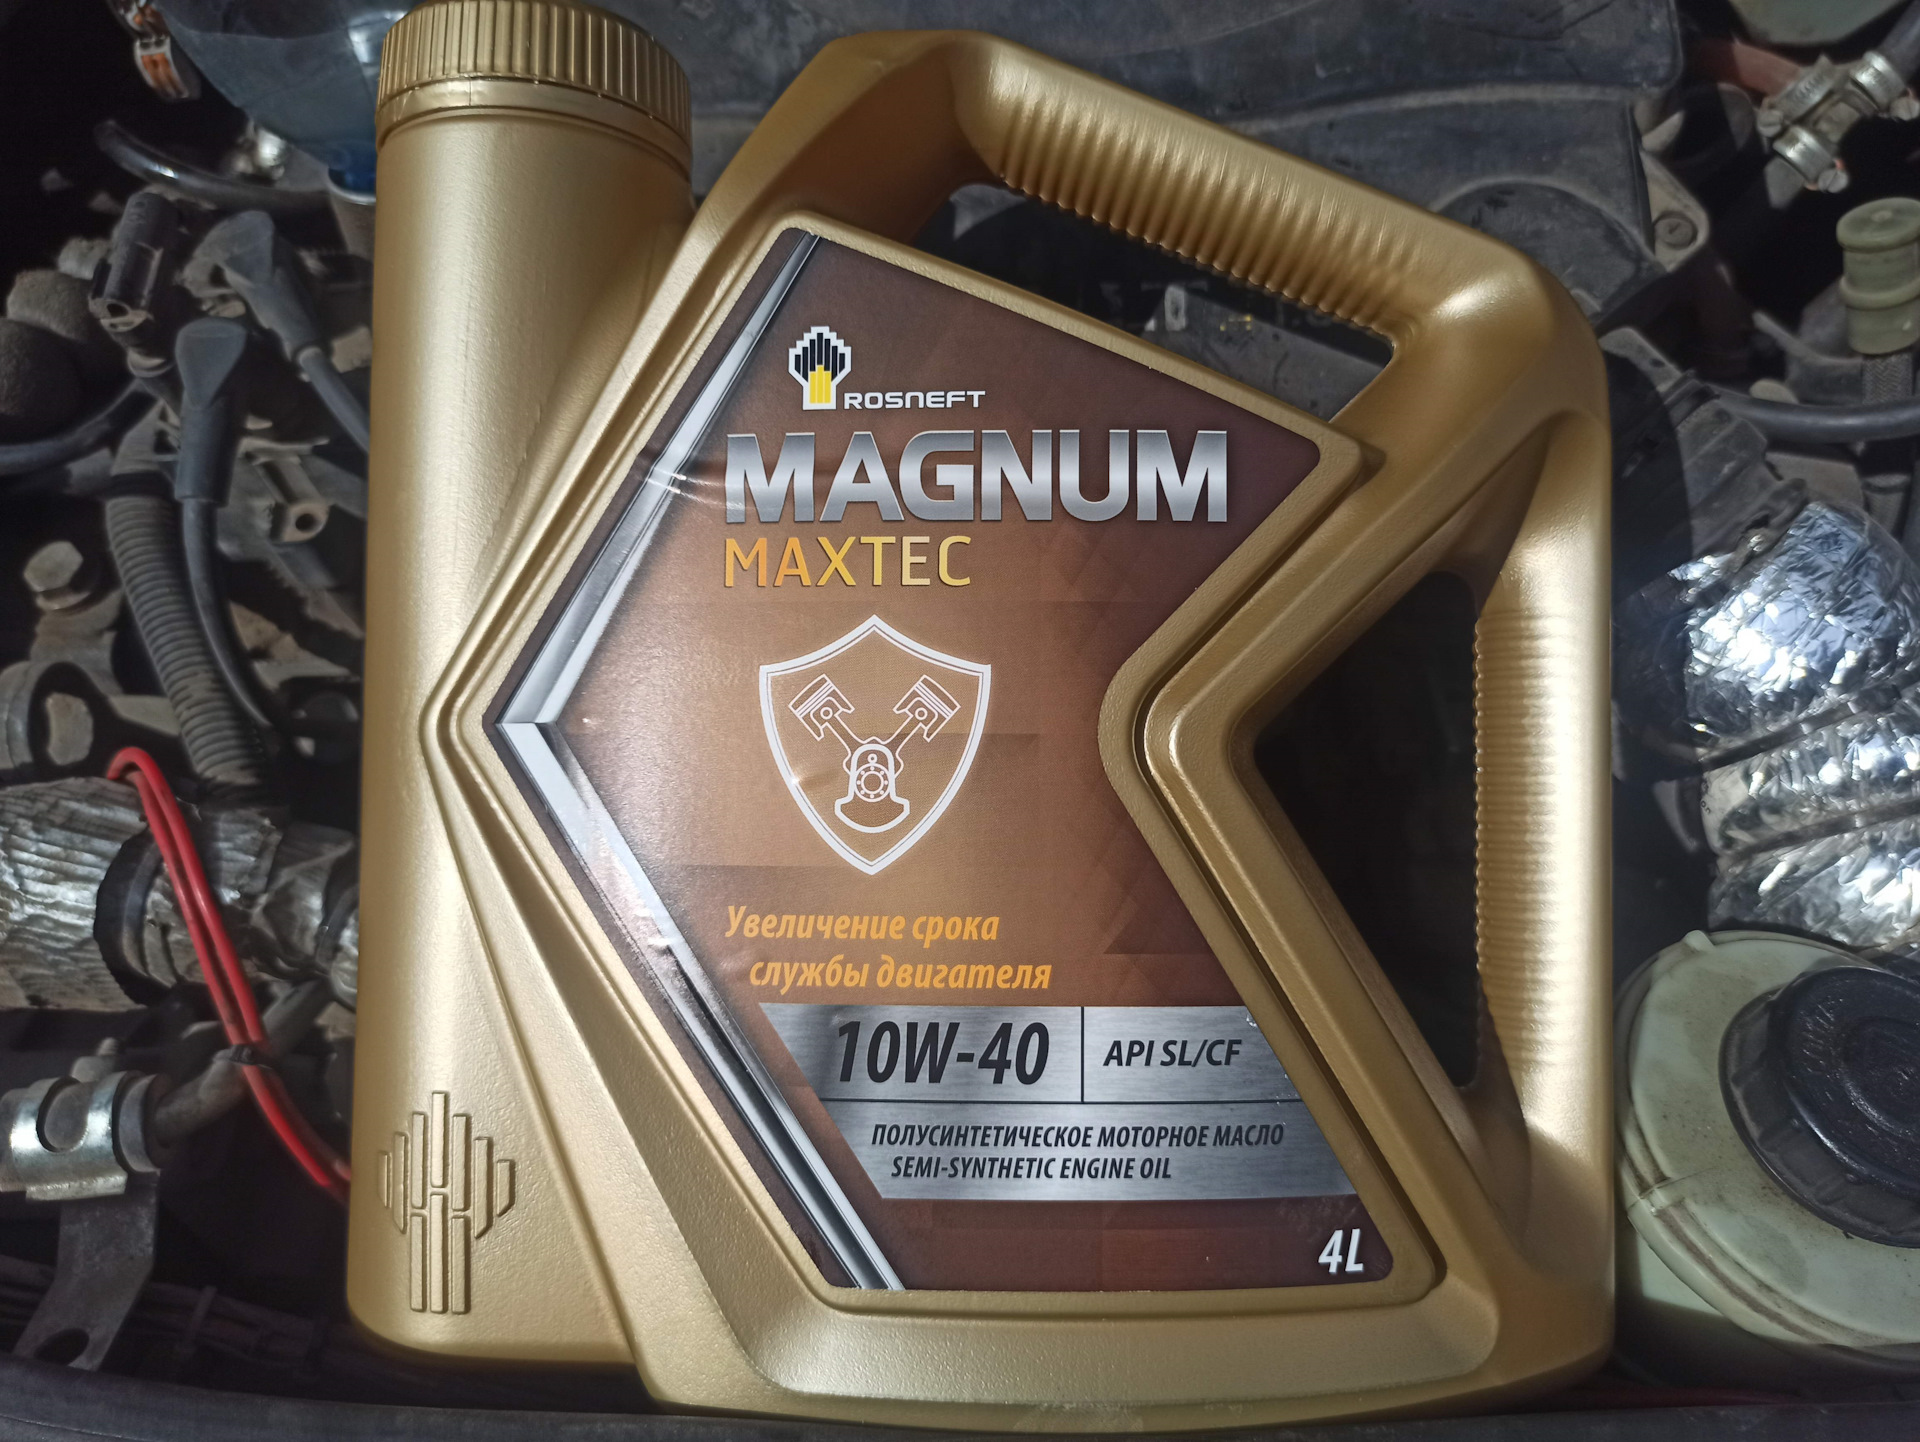 Rosneft Magnum Maxtec 10w-40. Масло Магнум для 1zz. Роснефть Магнум 5х50. МП 300 масло ДВС 5 В 40. Масло роснефть магнум полусинтетика